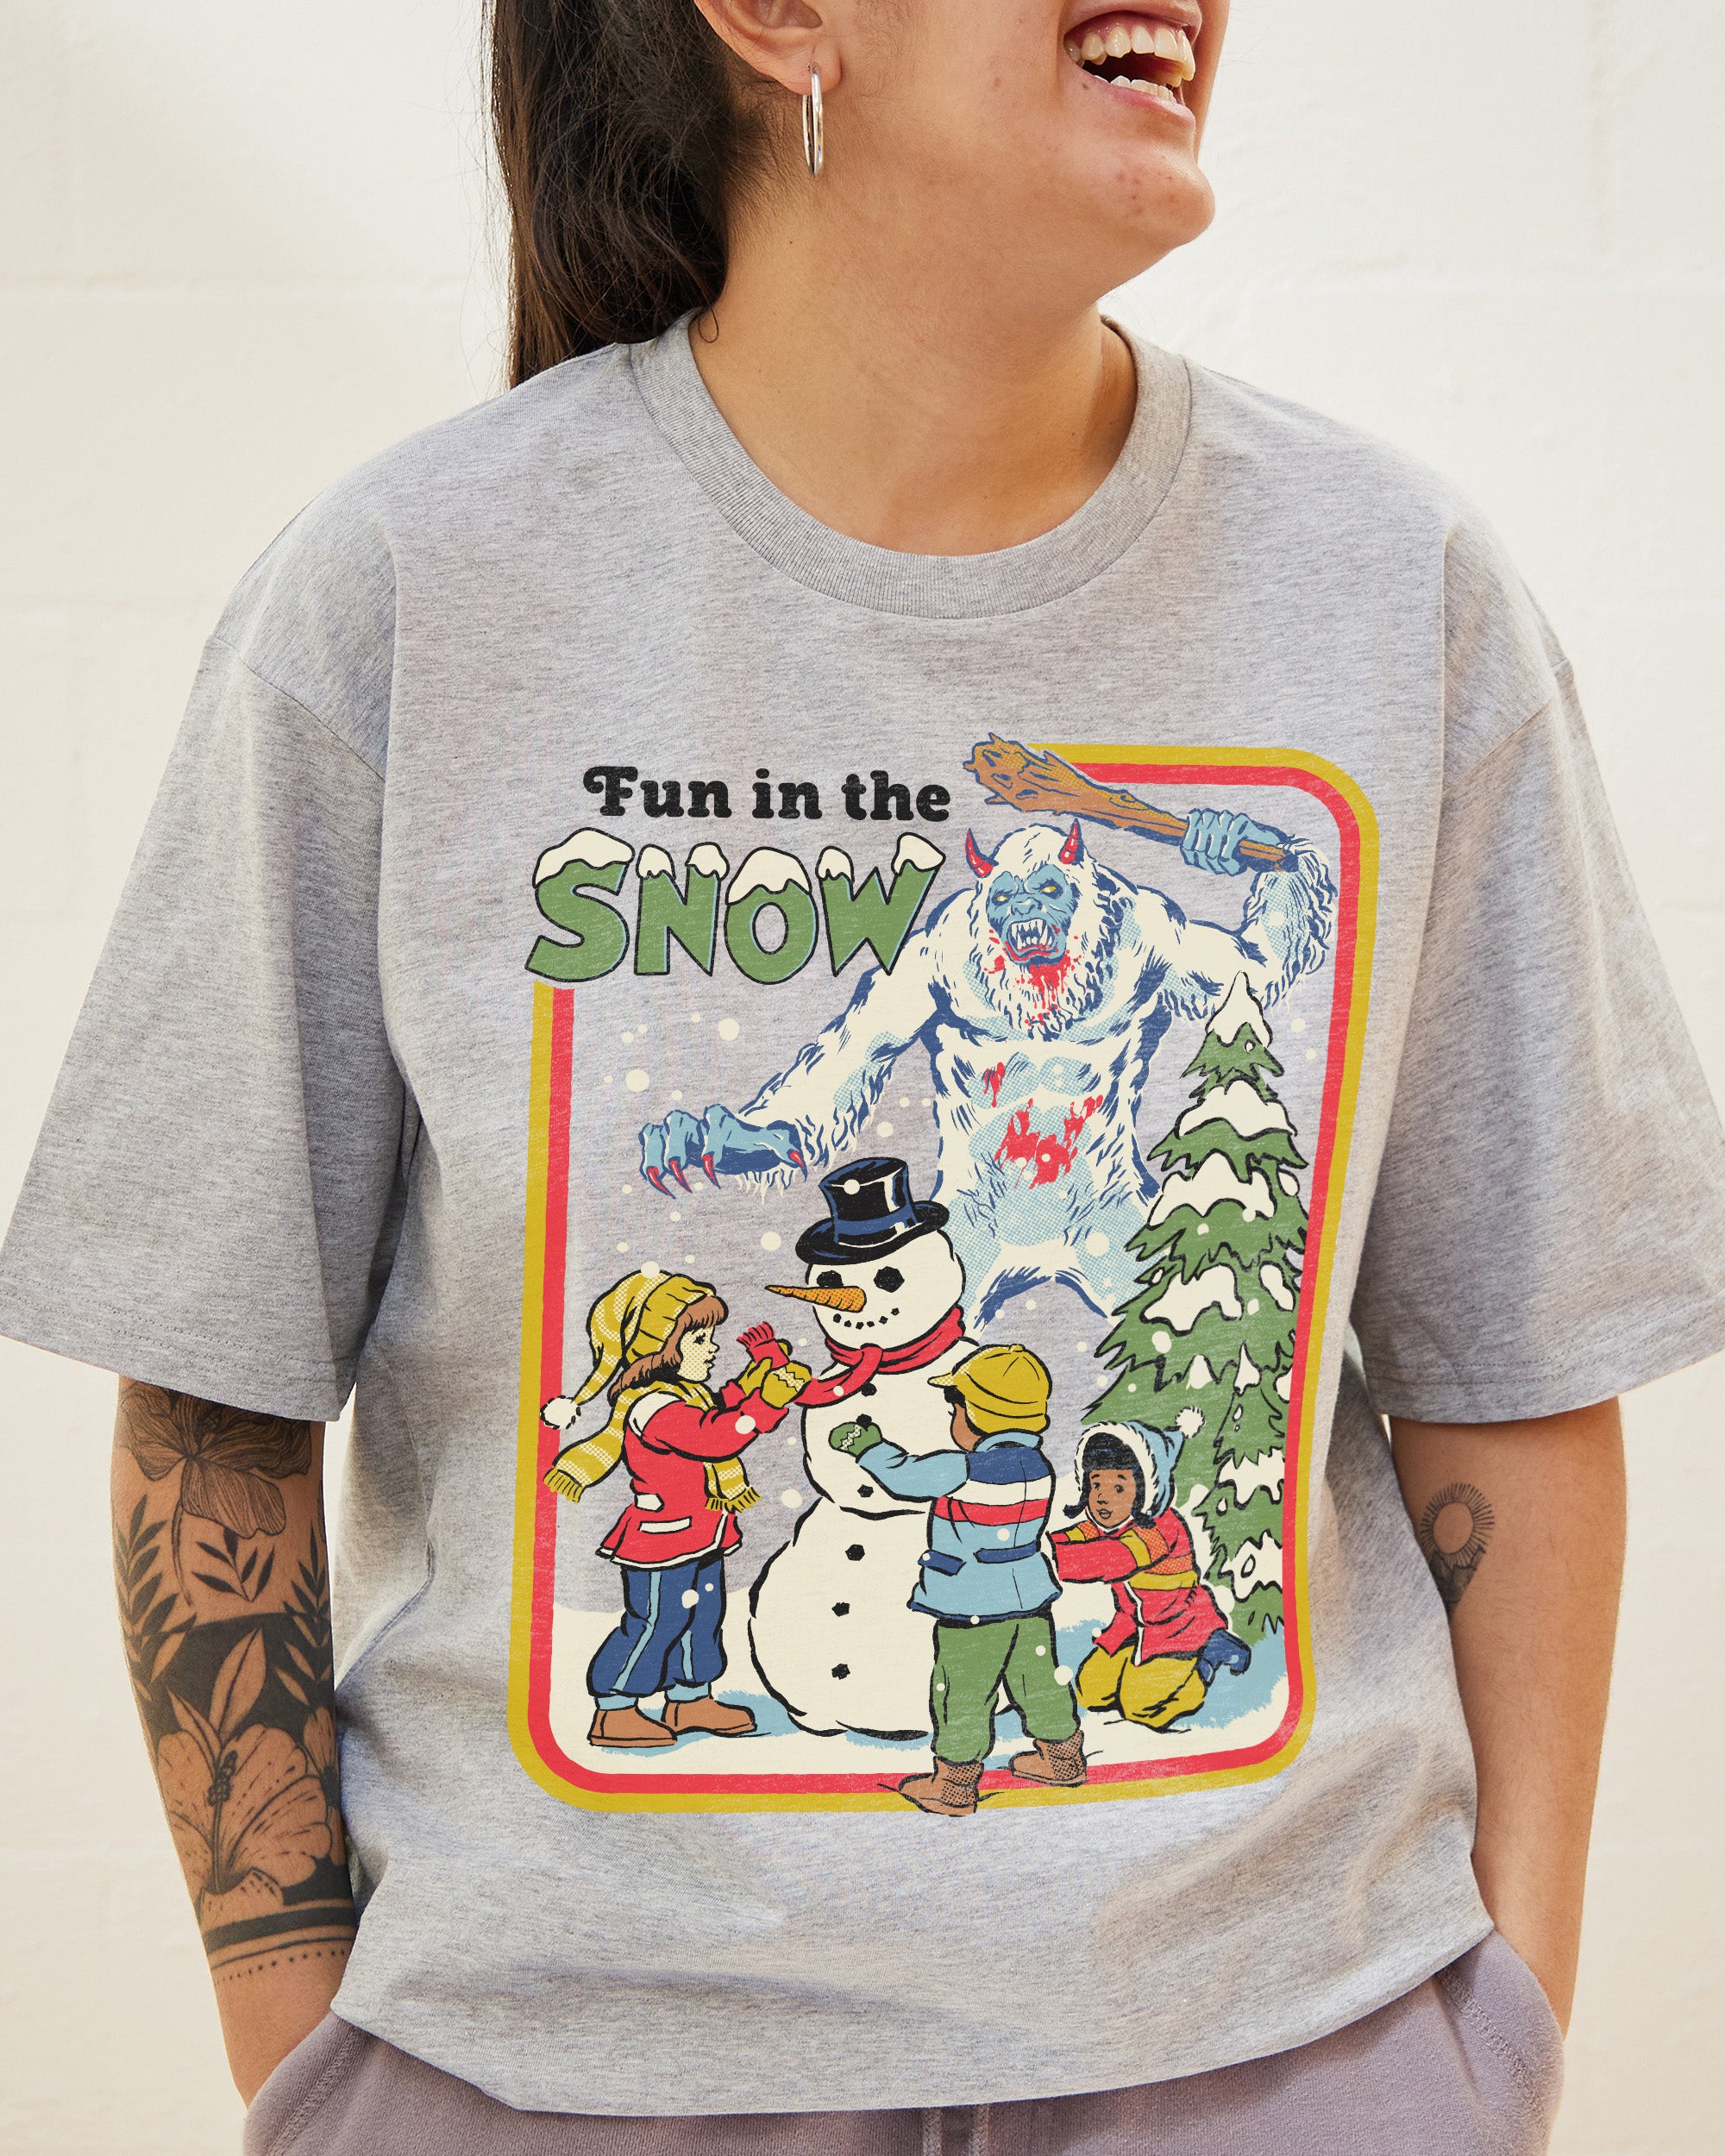 Fun in the Snow T-Shirt